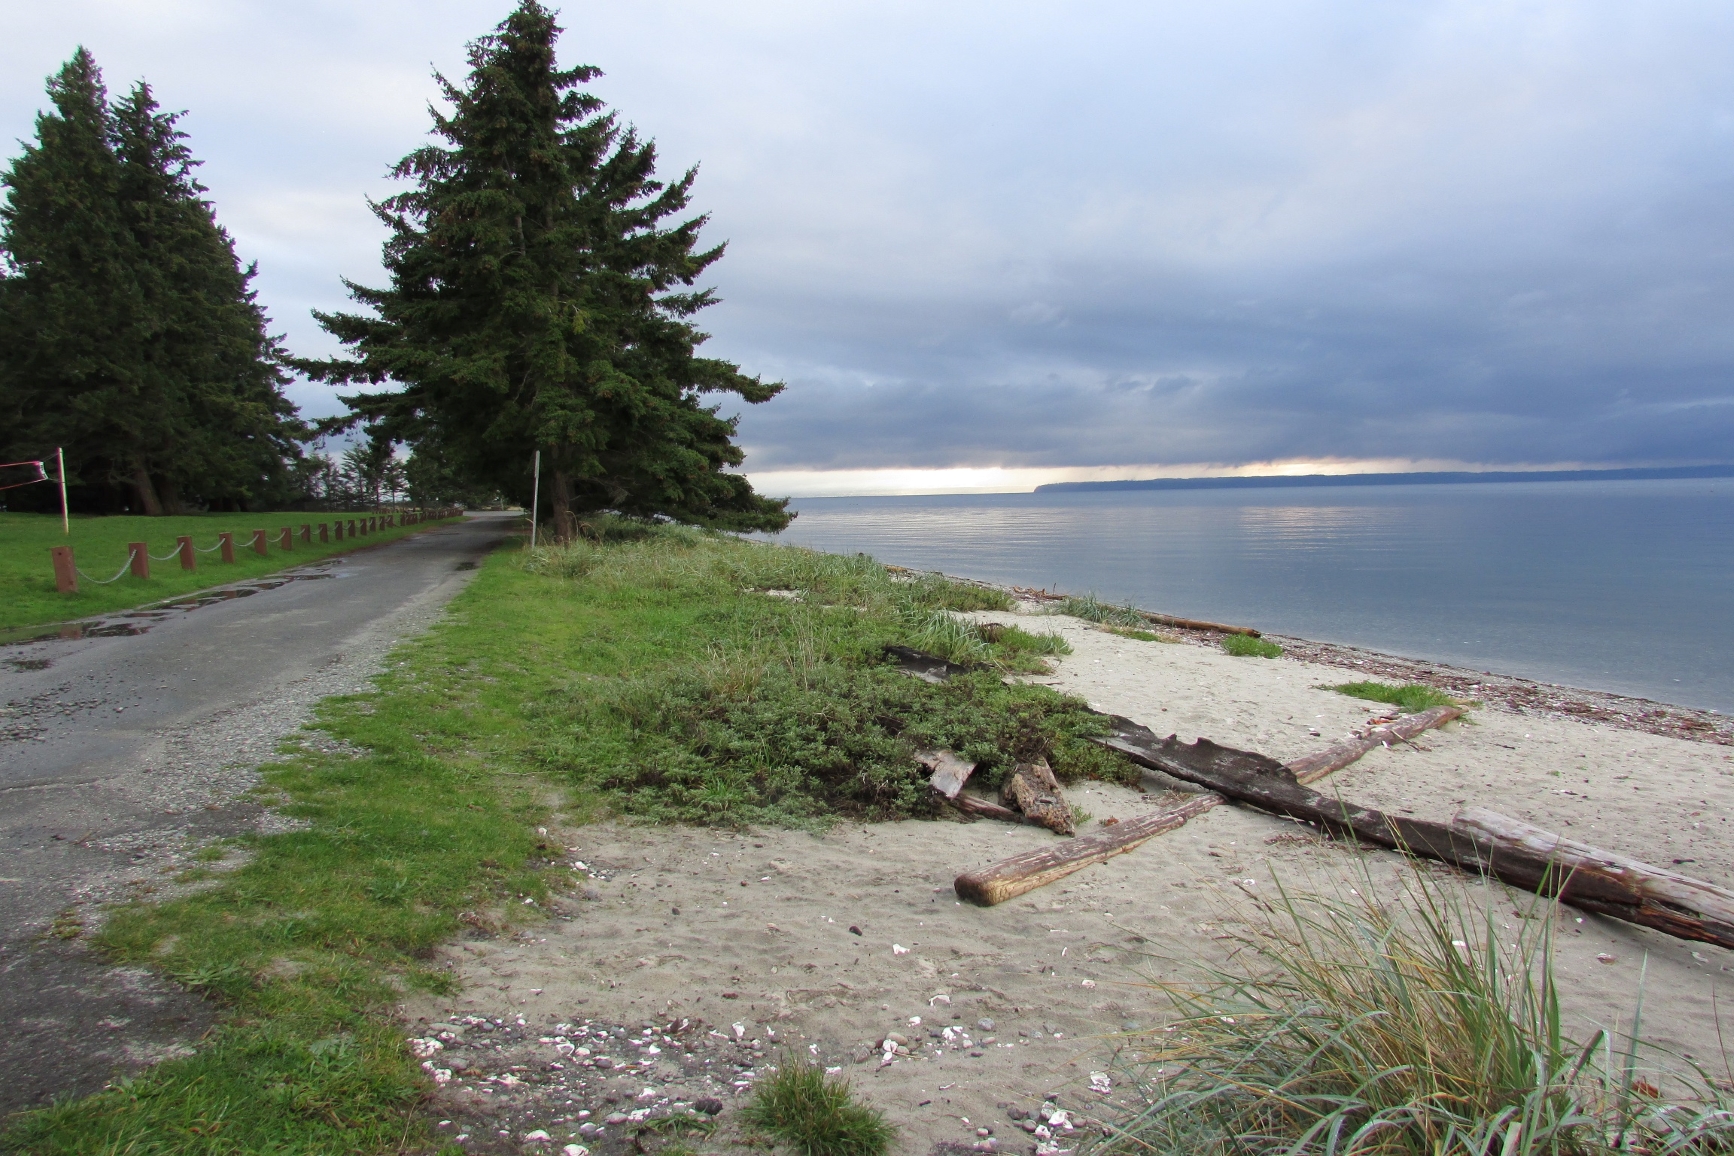 Smelt Bay Provincial Park day-use area